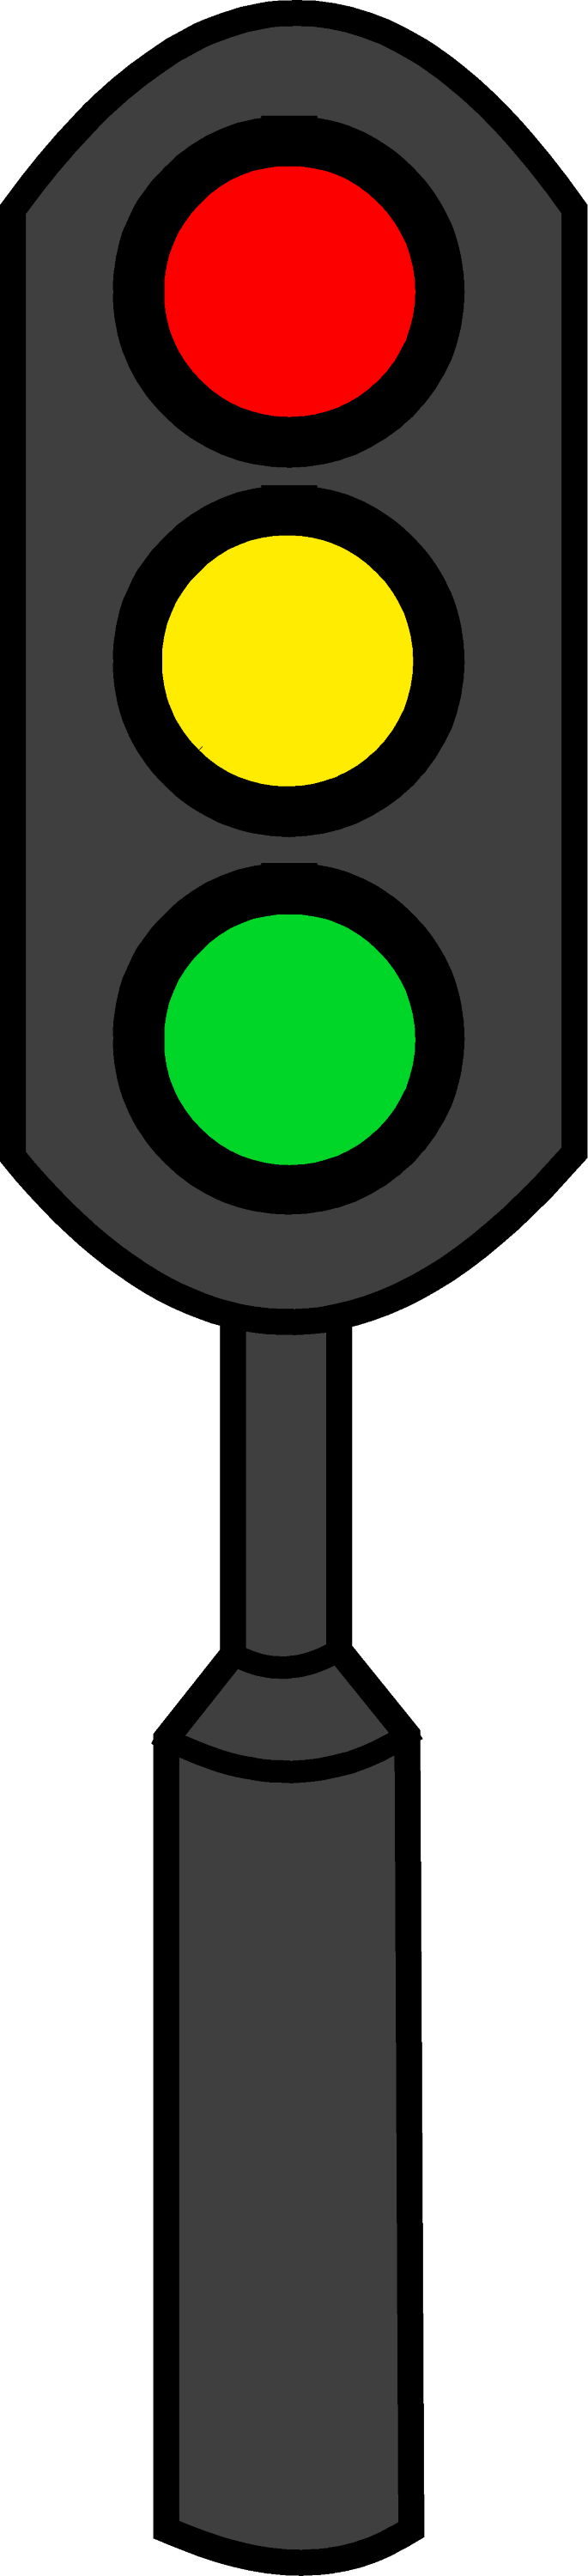 free clipart traffic light green - photo #11